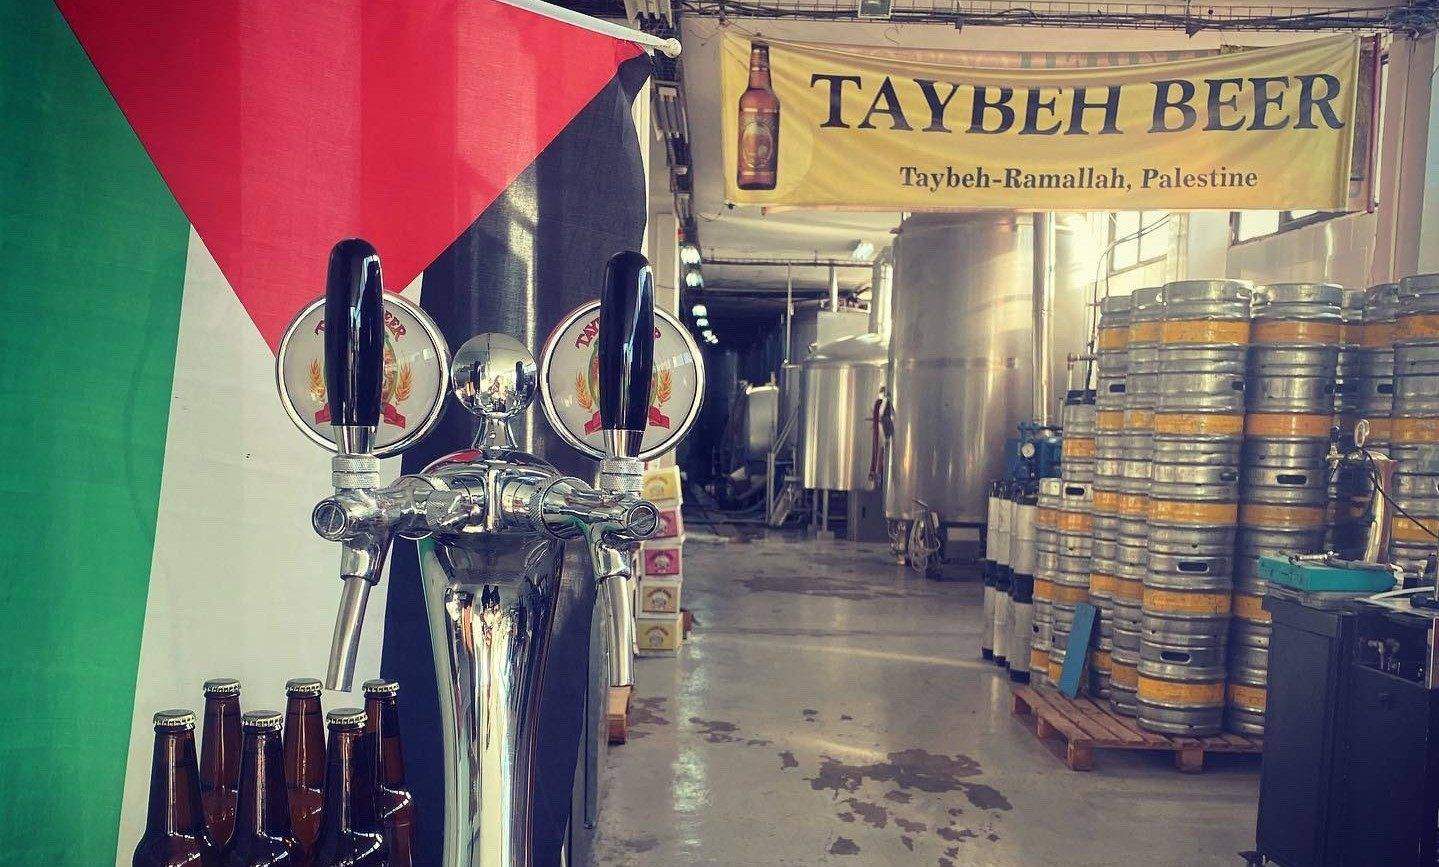 brewed-in-palestine-taybeh-beer-comes-to-the-uae-trends-mena